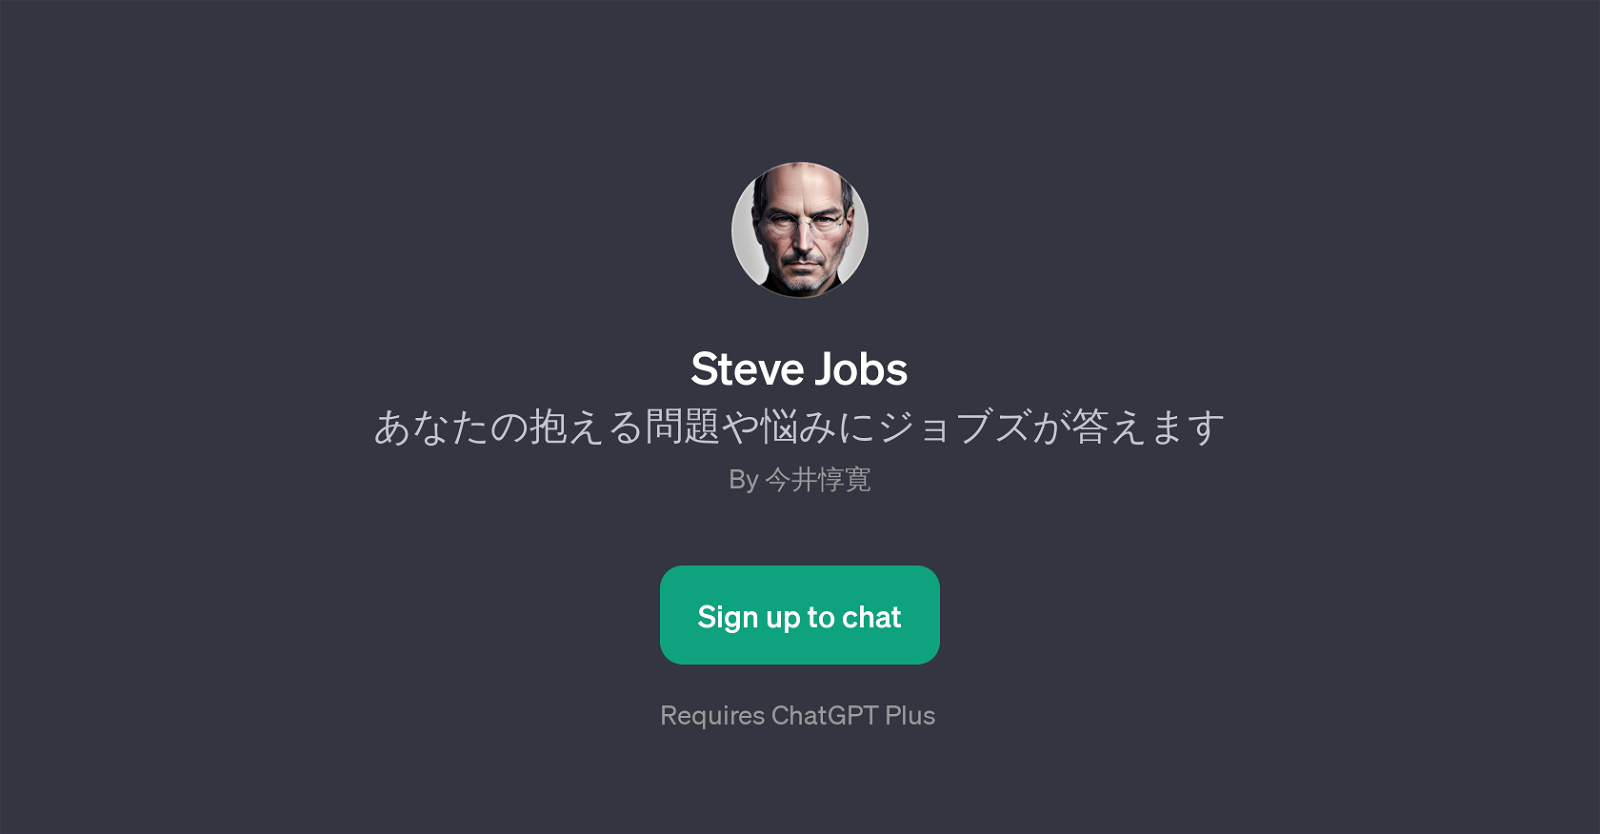 Steve Jobs GPT website